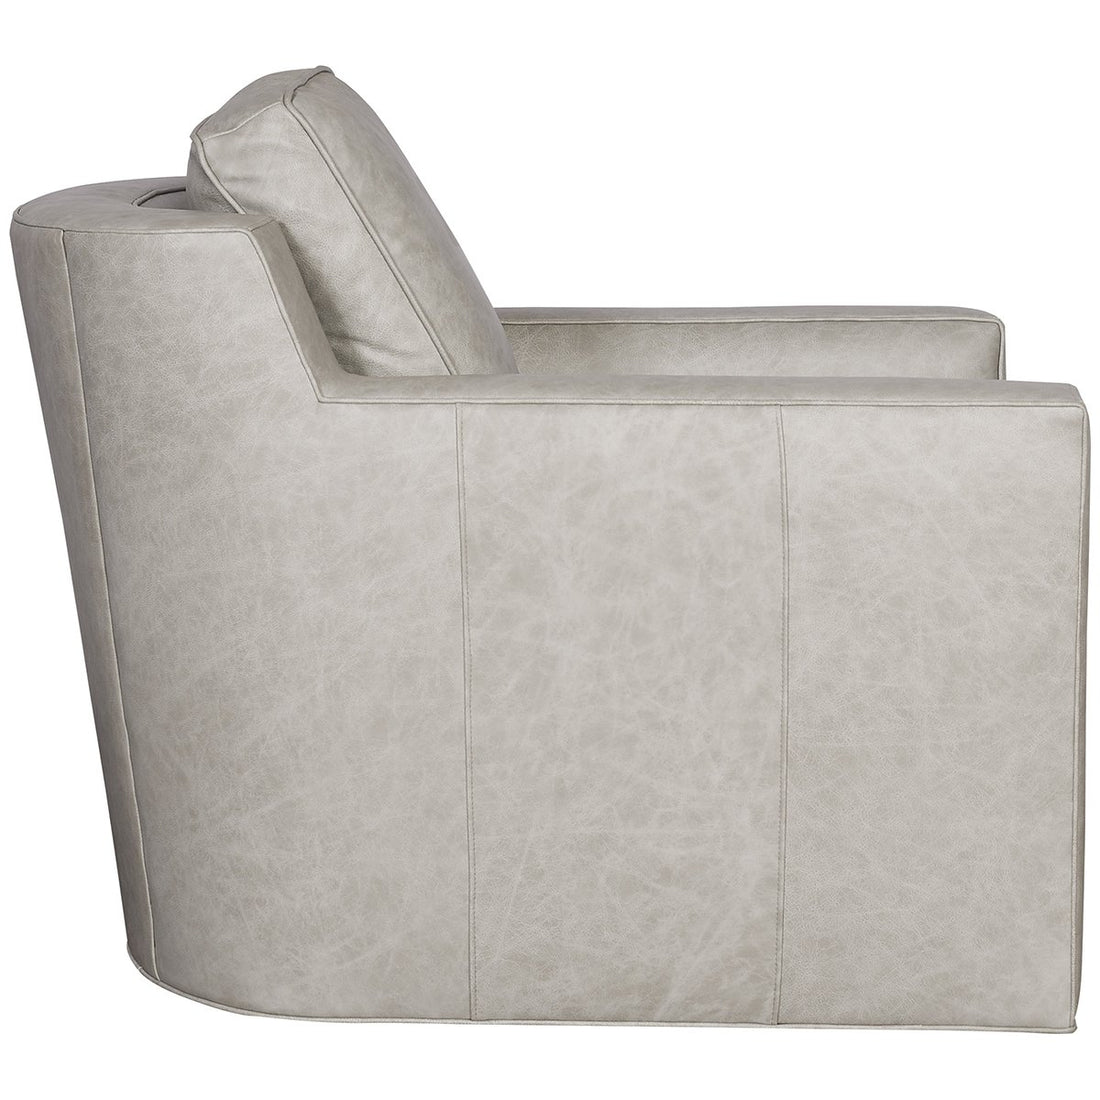 Vanguard Furniture Hillcrest Barrel Back Swivel Chair